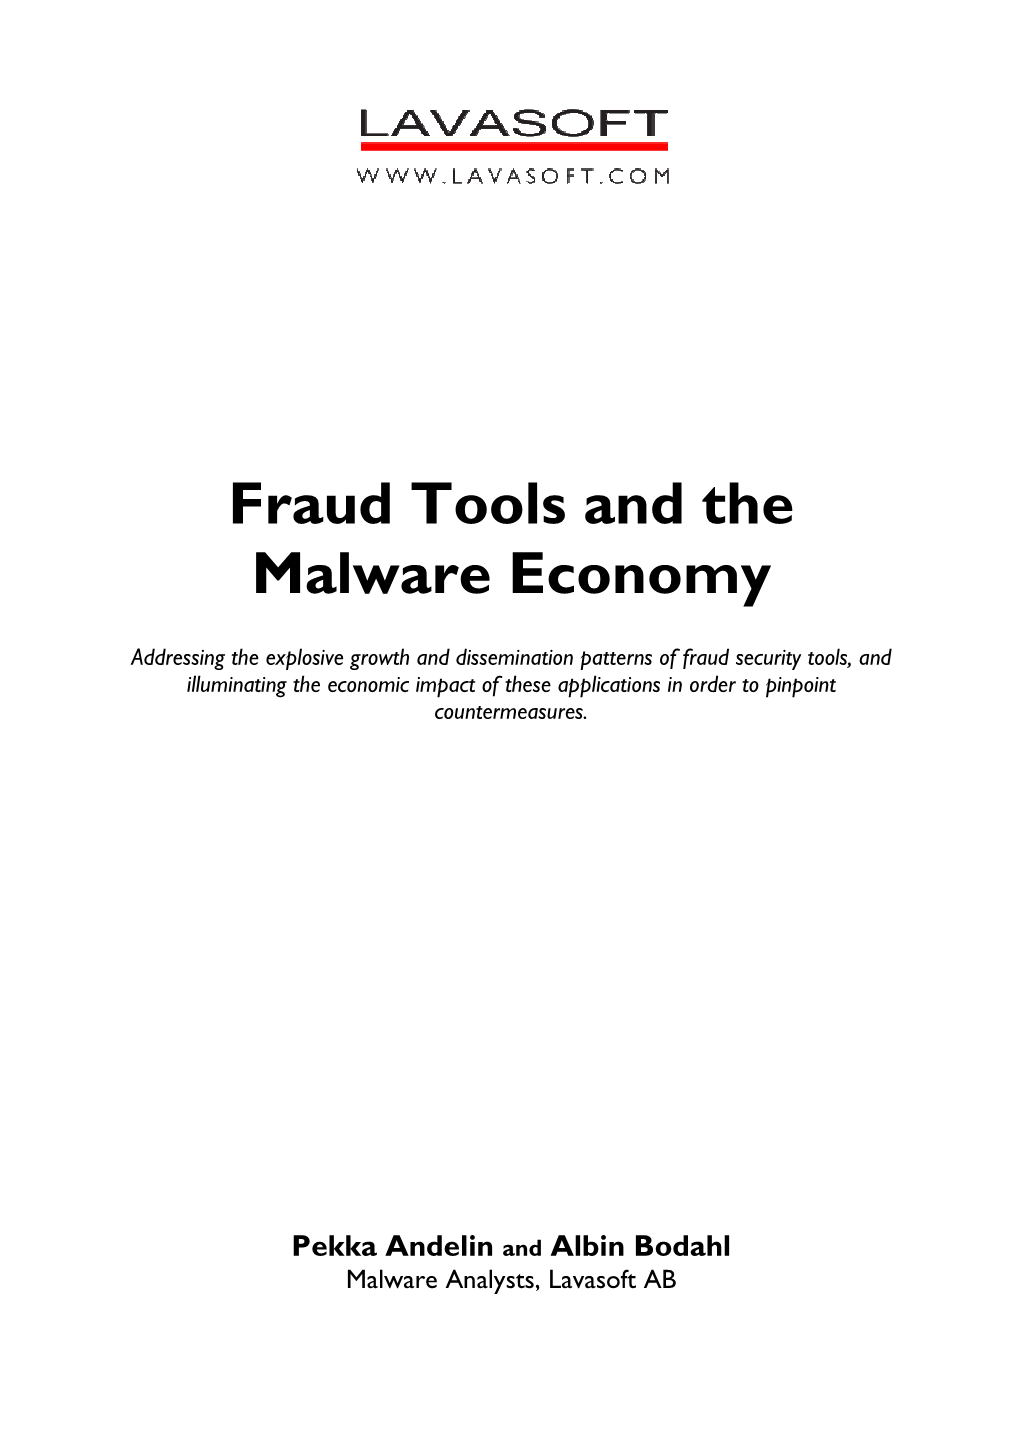 Fraud Tools and the Malware Economy